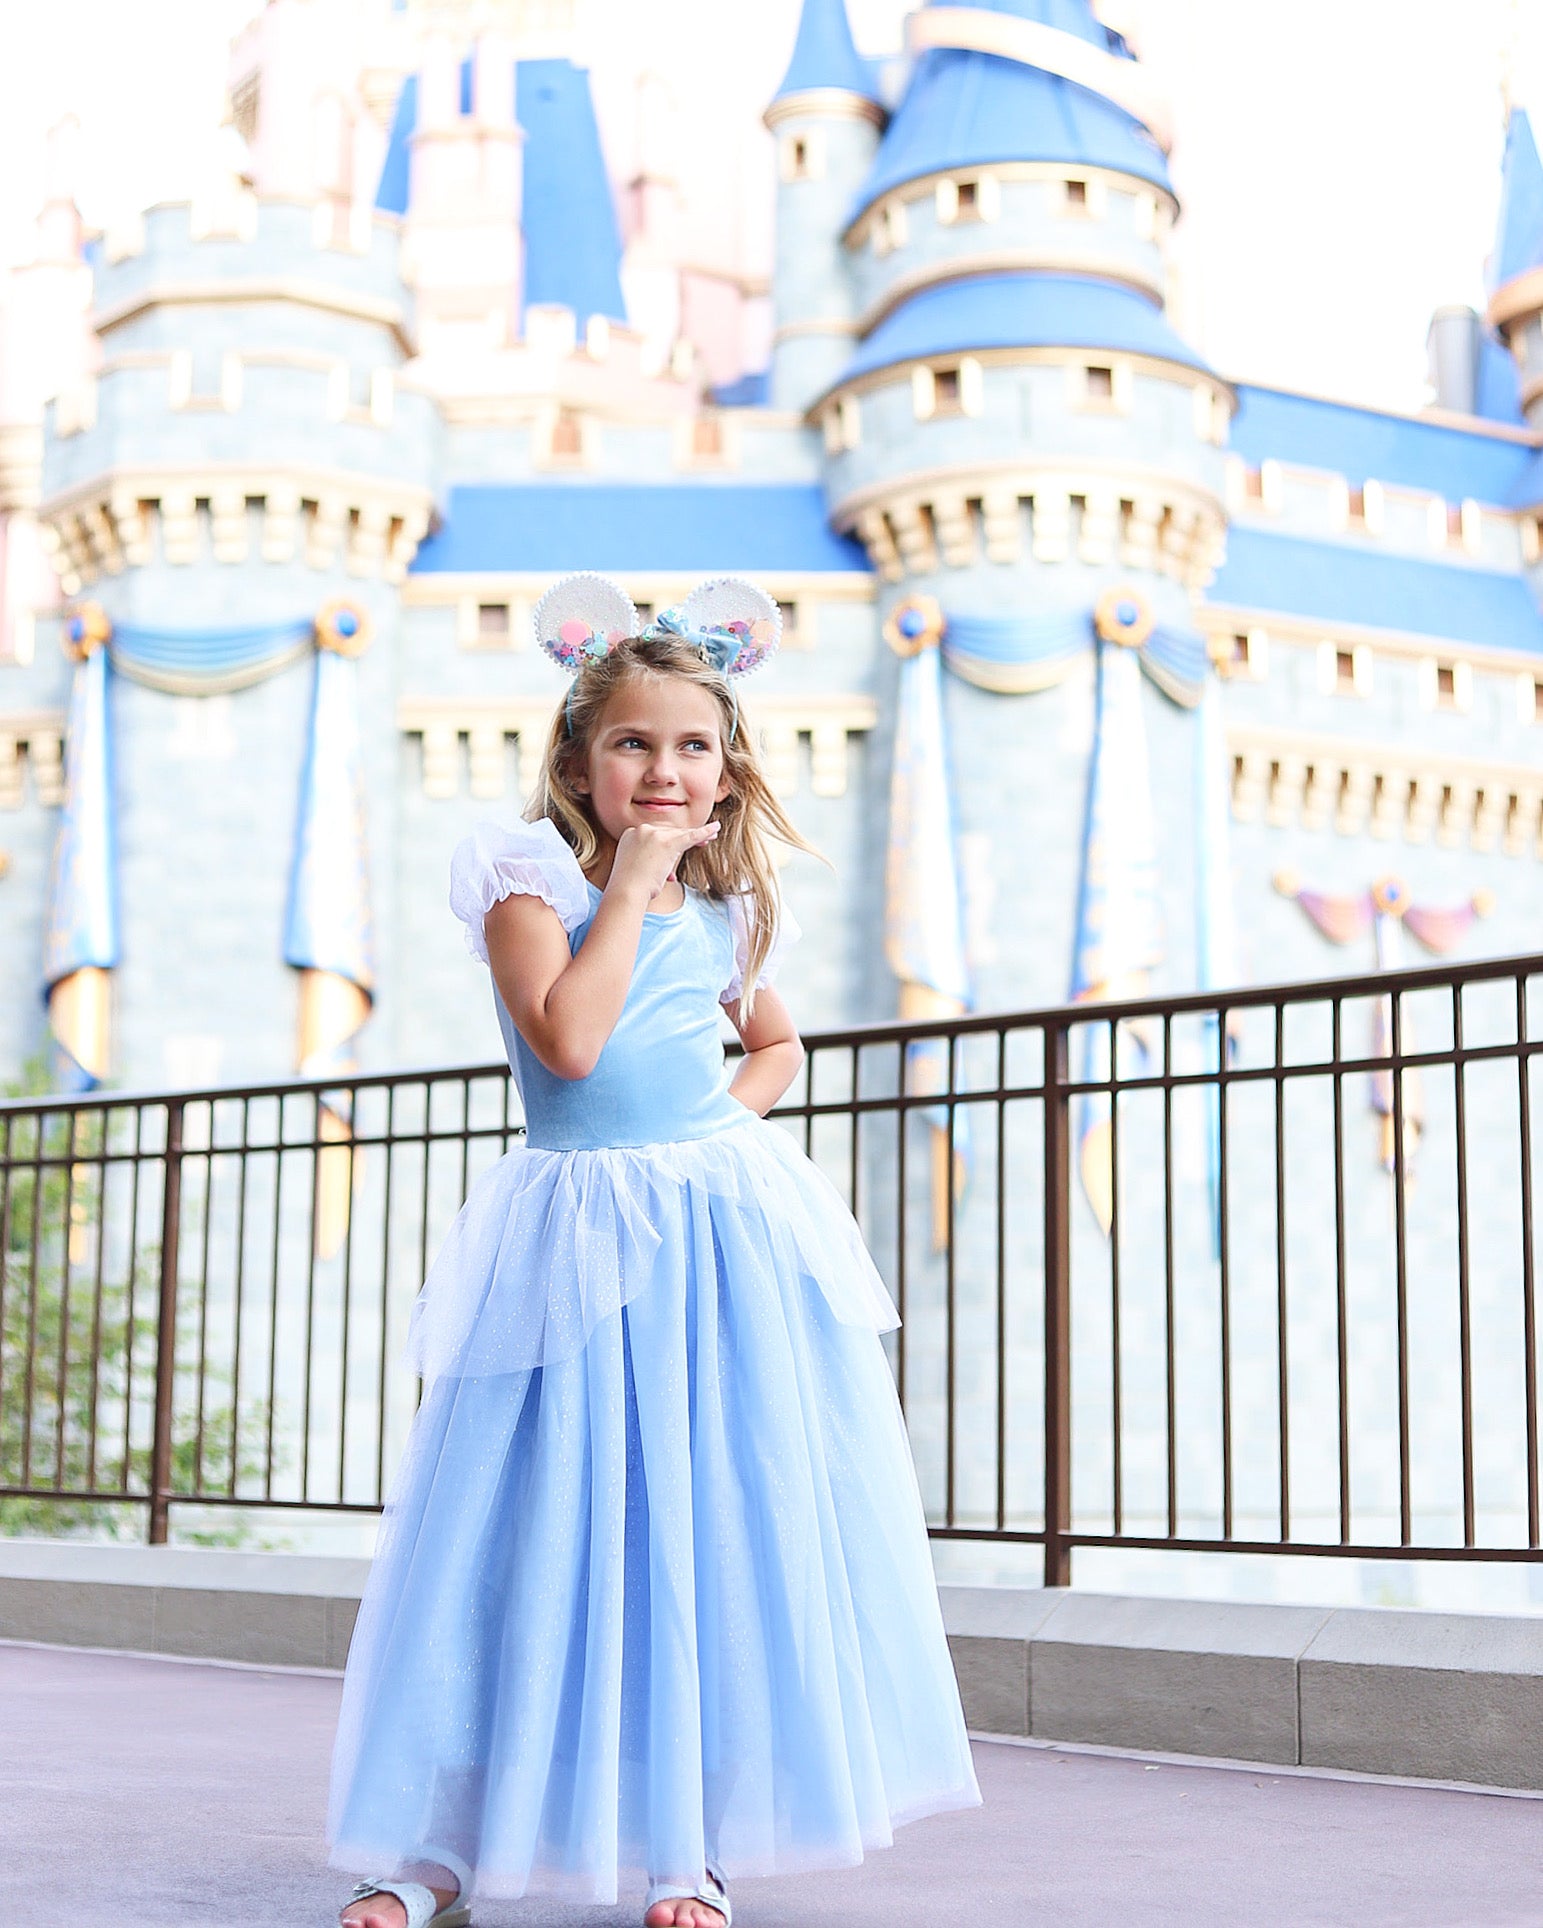 The Princess Cinderella Blue Couture Costume Dress